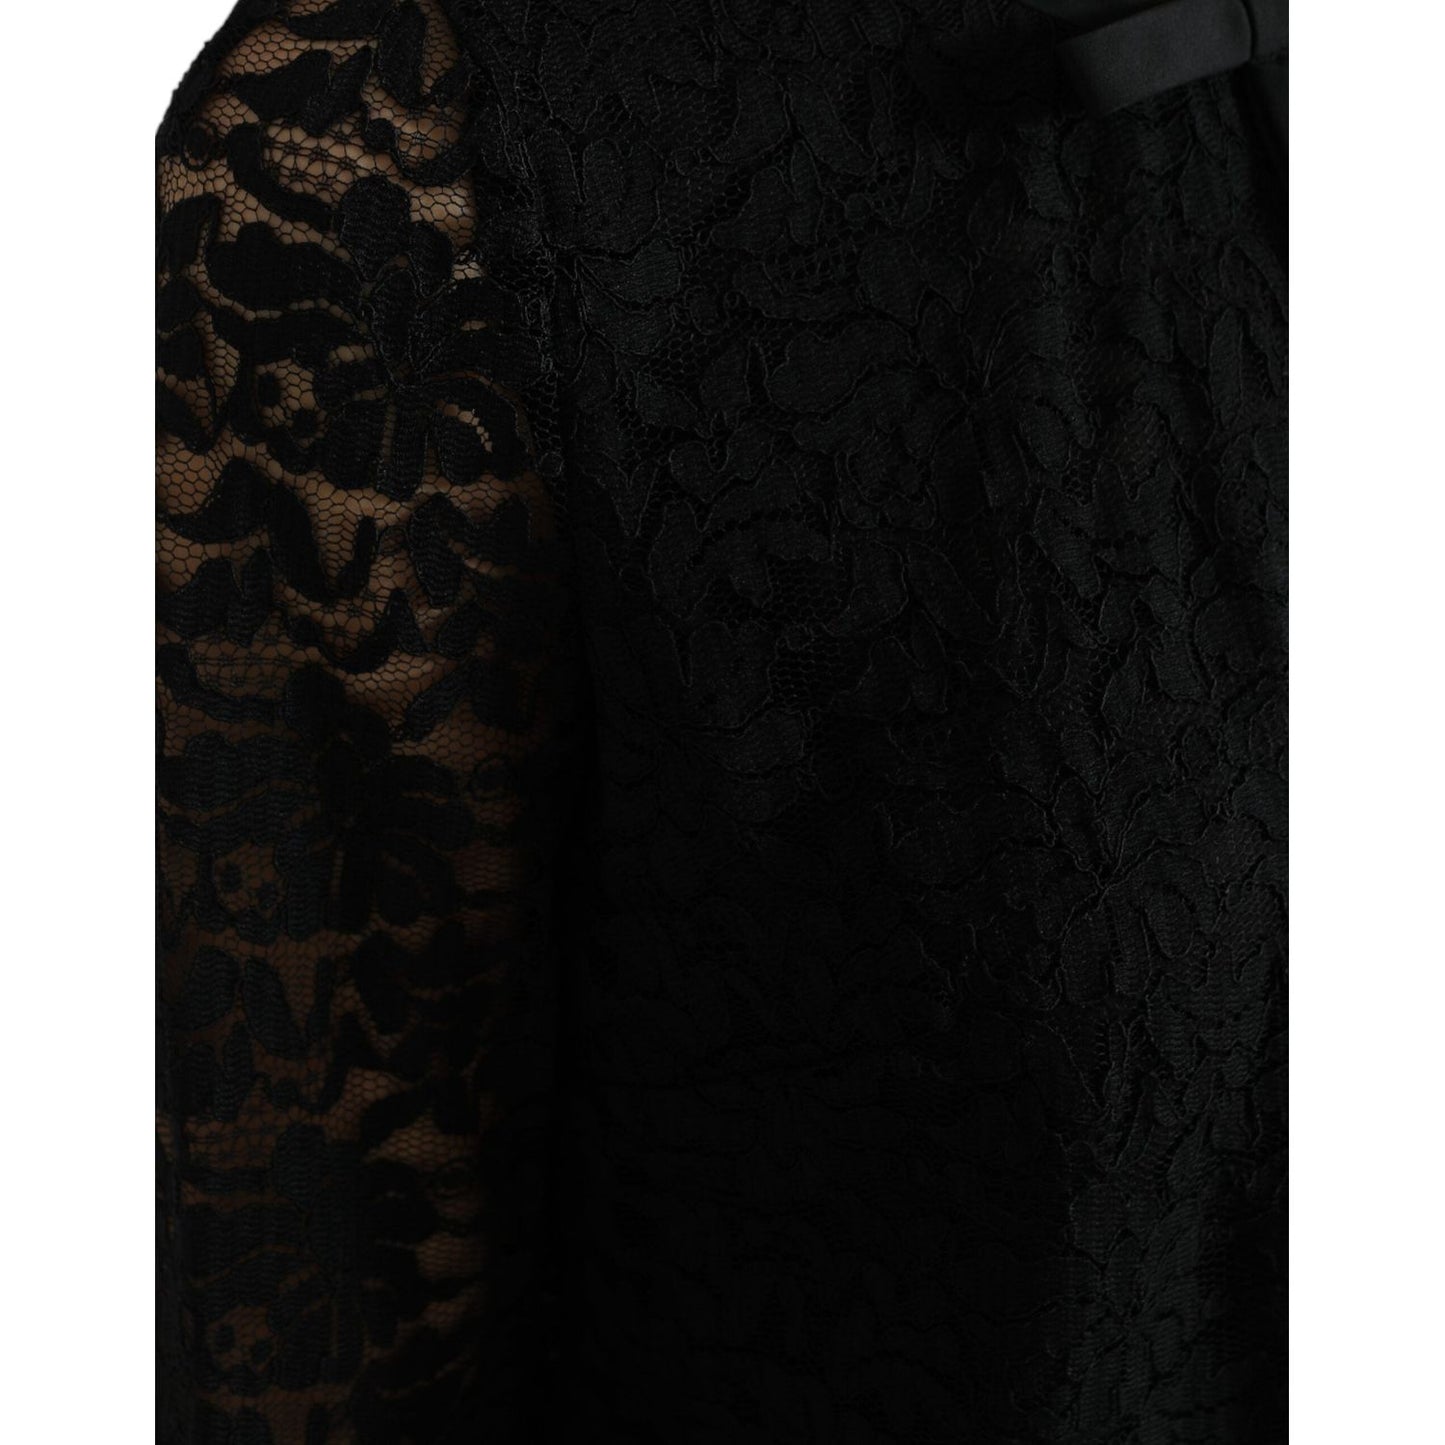 Dolce & Gabbana Elegant Floral Lace Long Sleeve Top black-staff-blouse-floral-lace-nylon-top